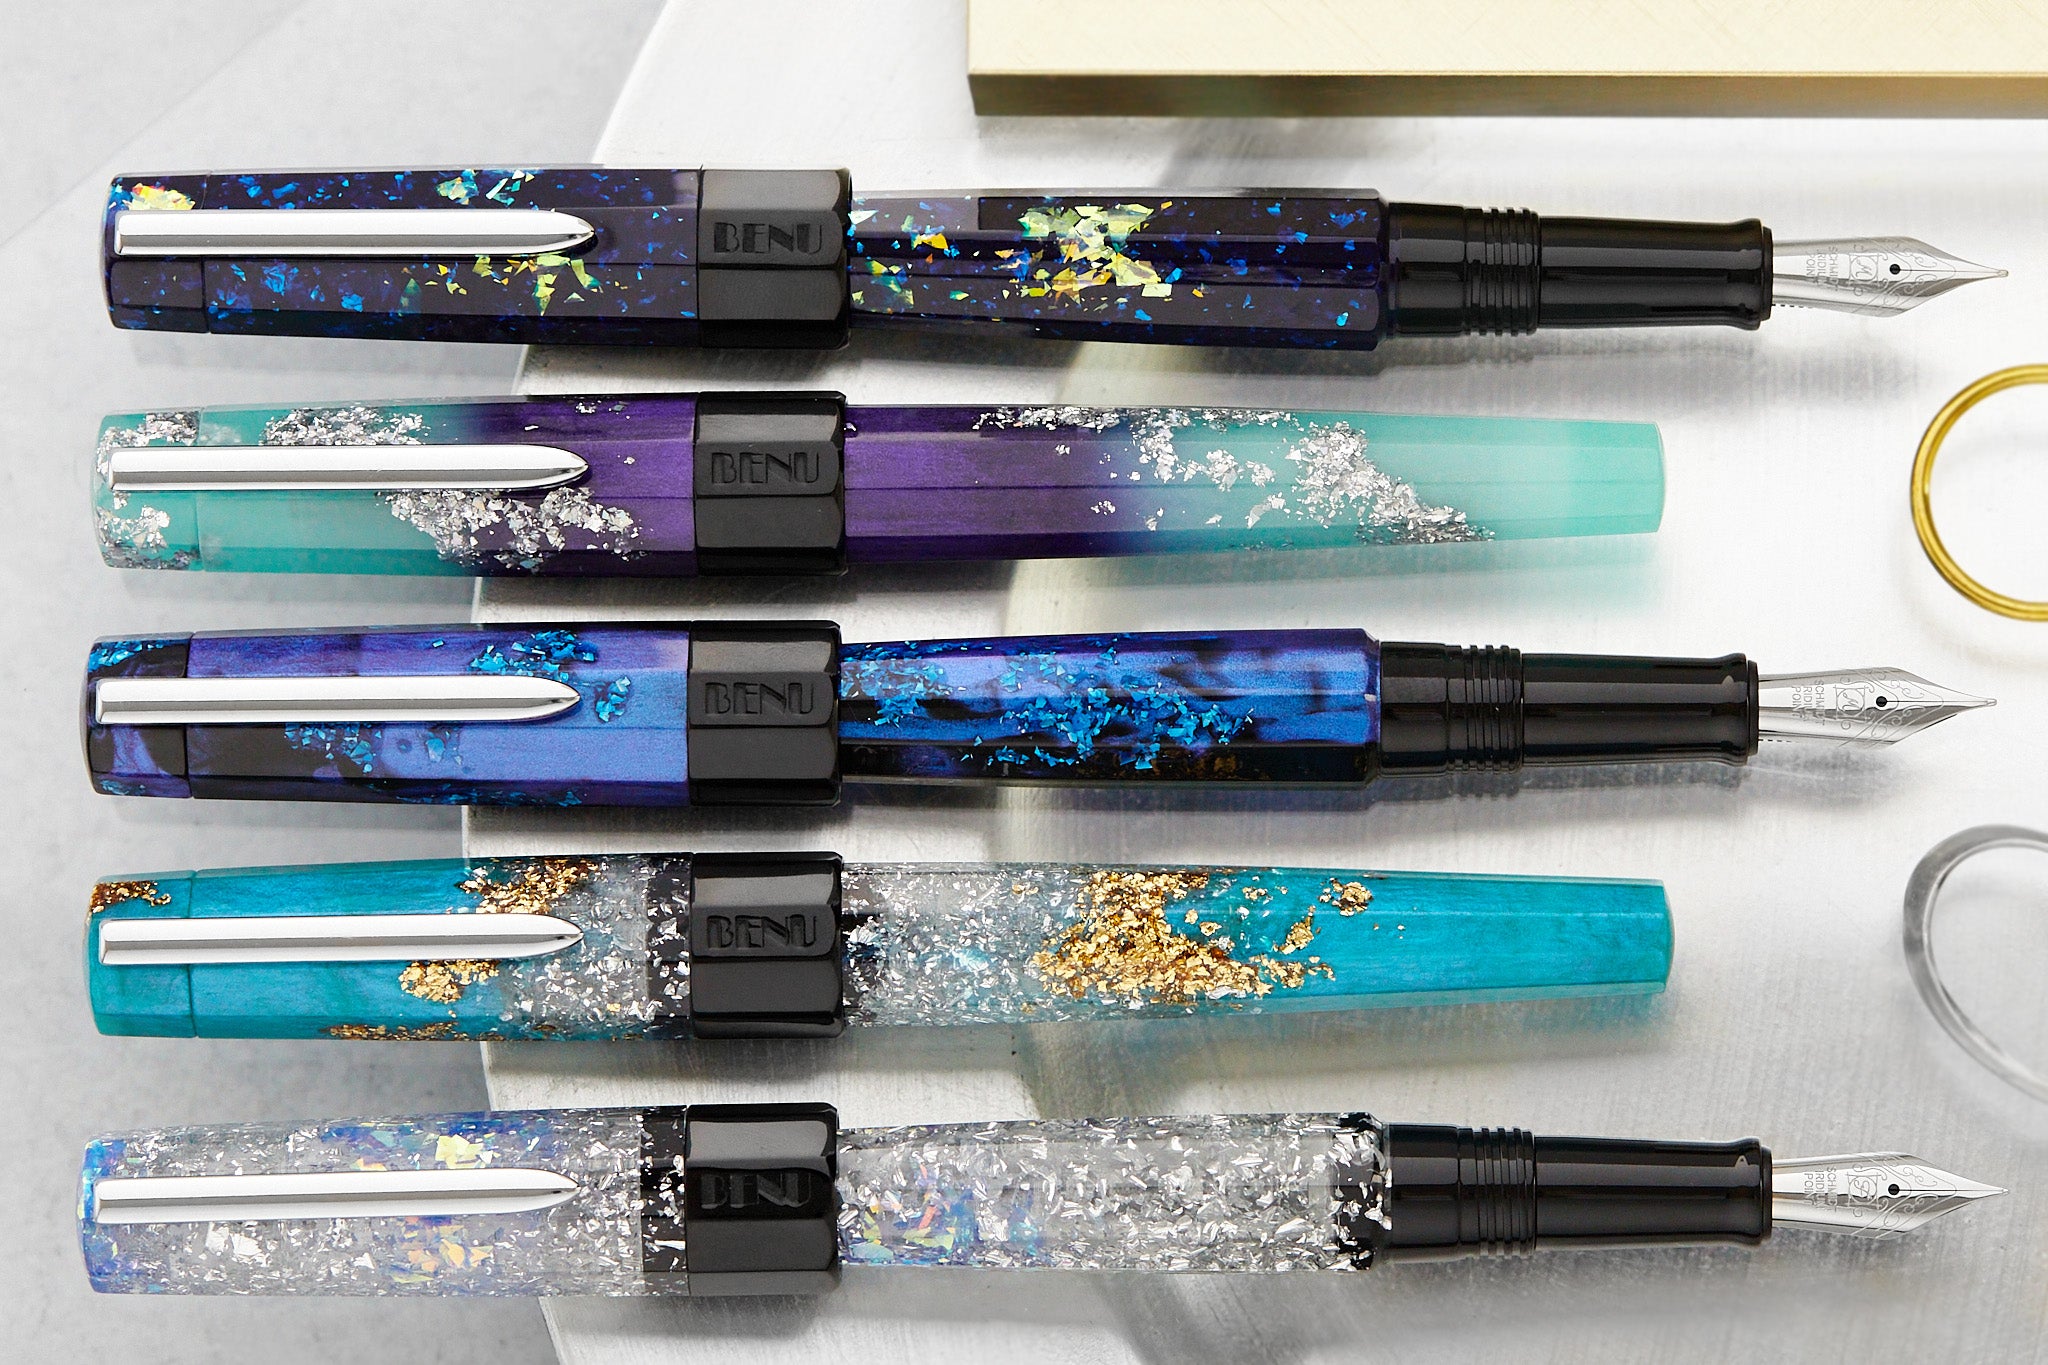 5 glittery BENU Euphoria fountain pens in a row